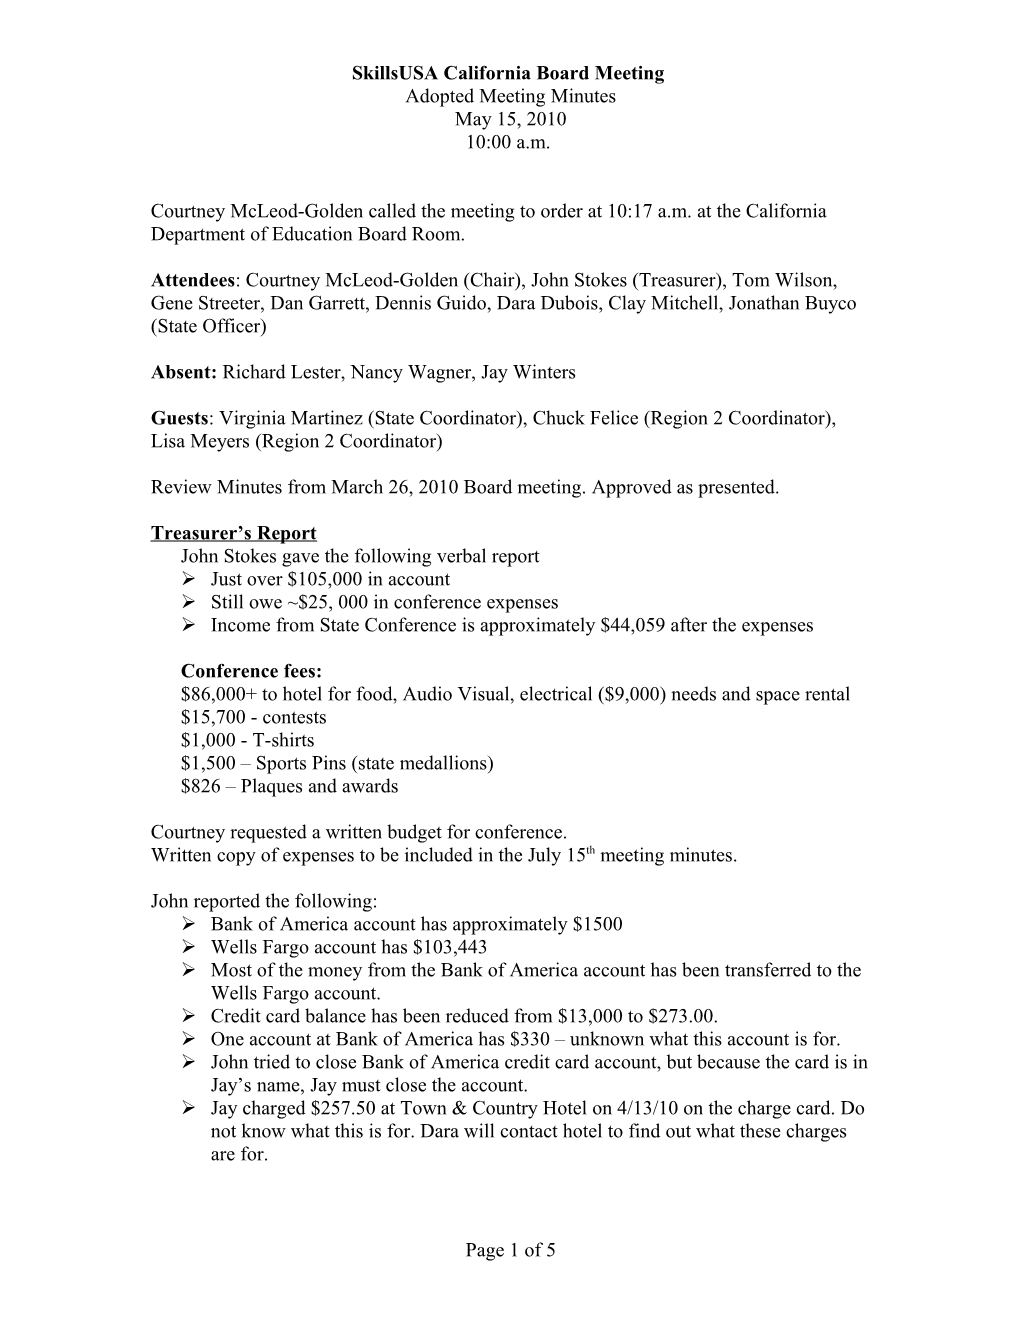 Skillsusa California Board Meeting Minutes